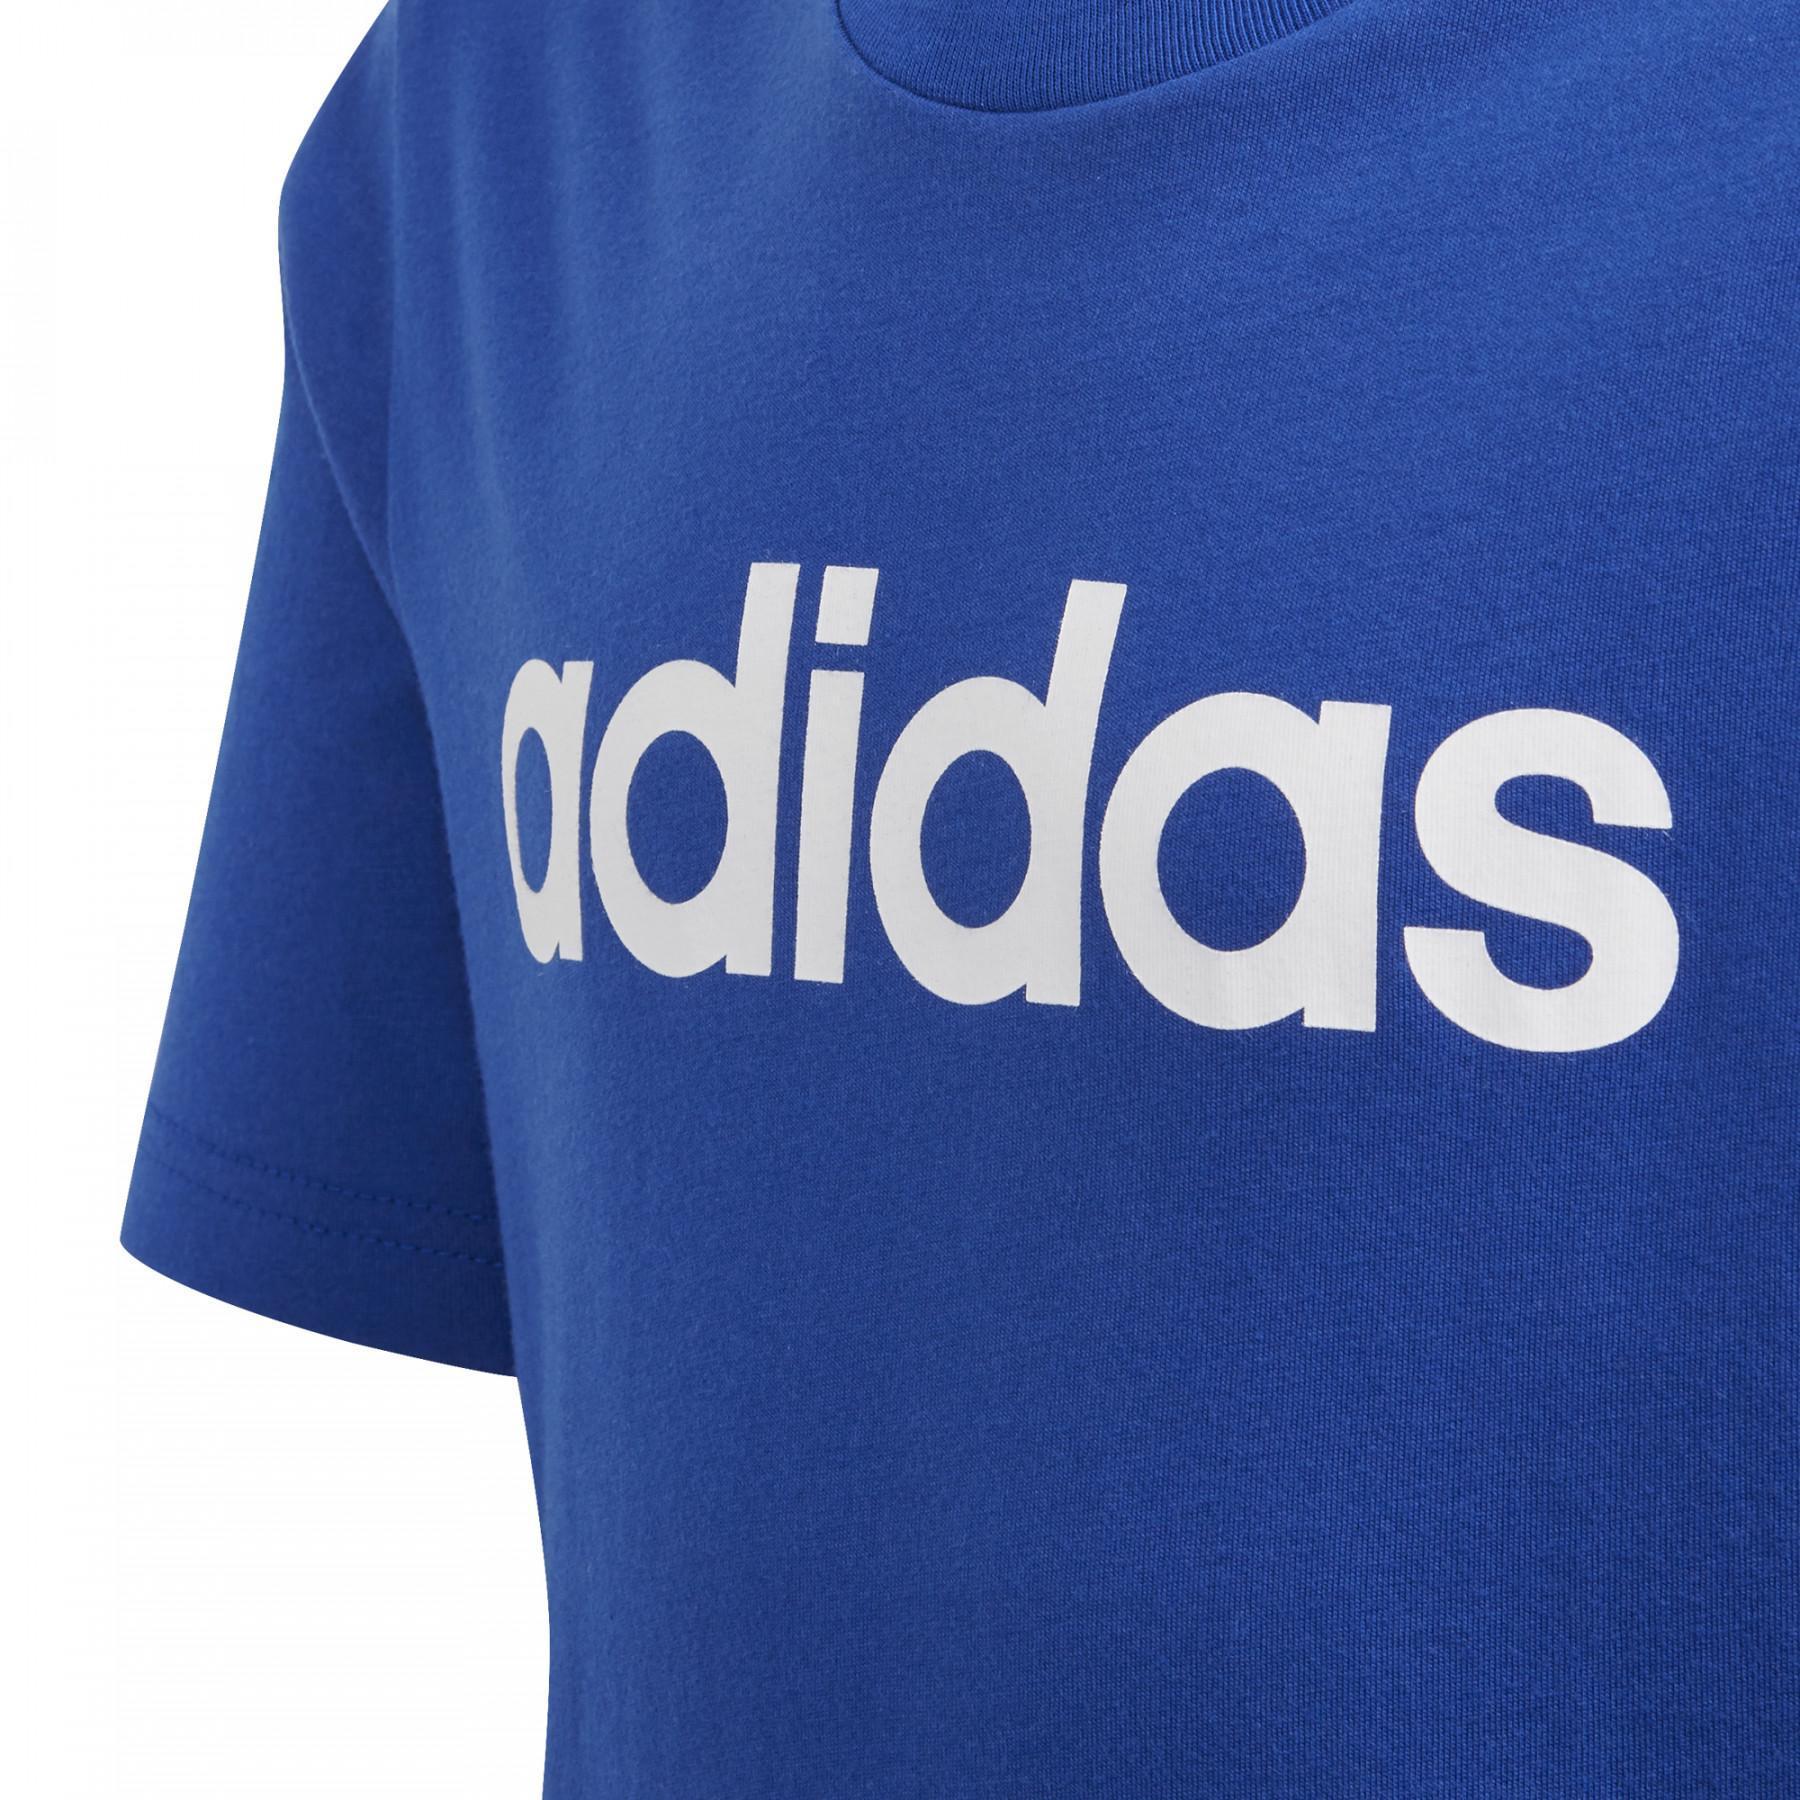 Kinder-T-Shirt adidas Essentials Linear Logo